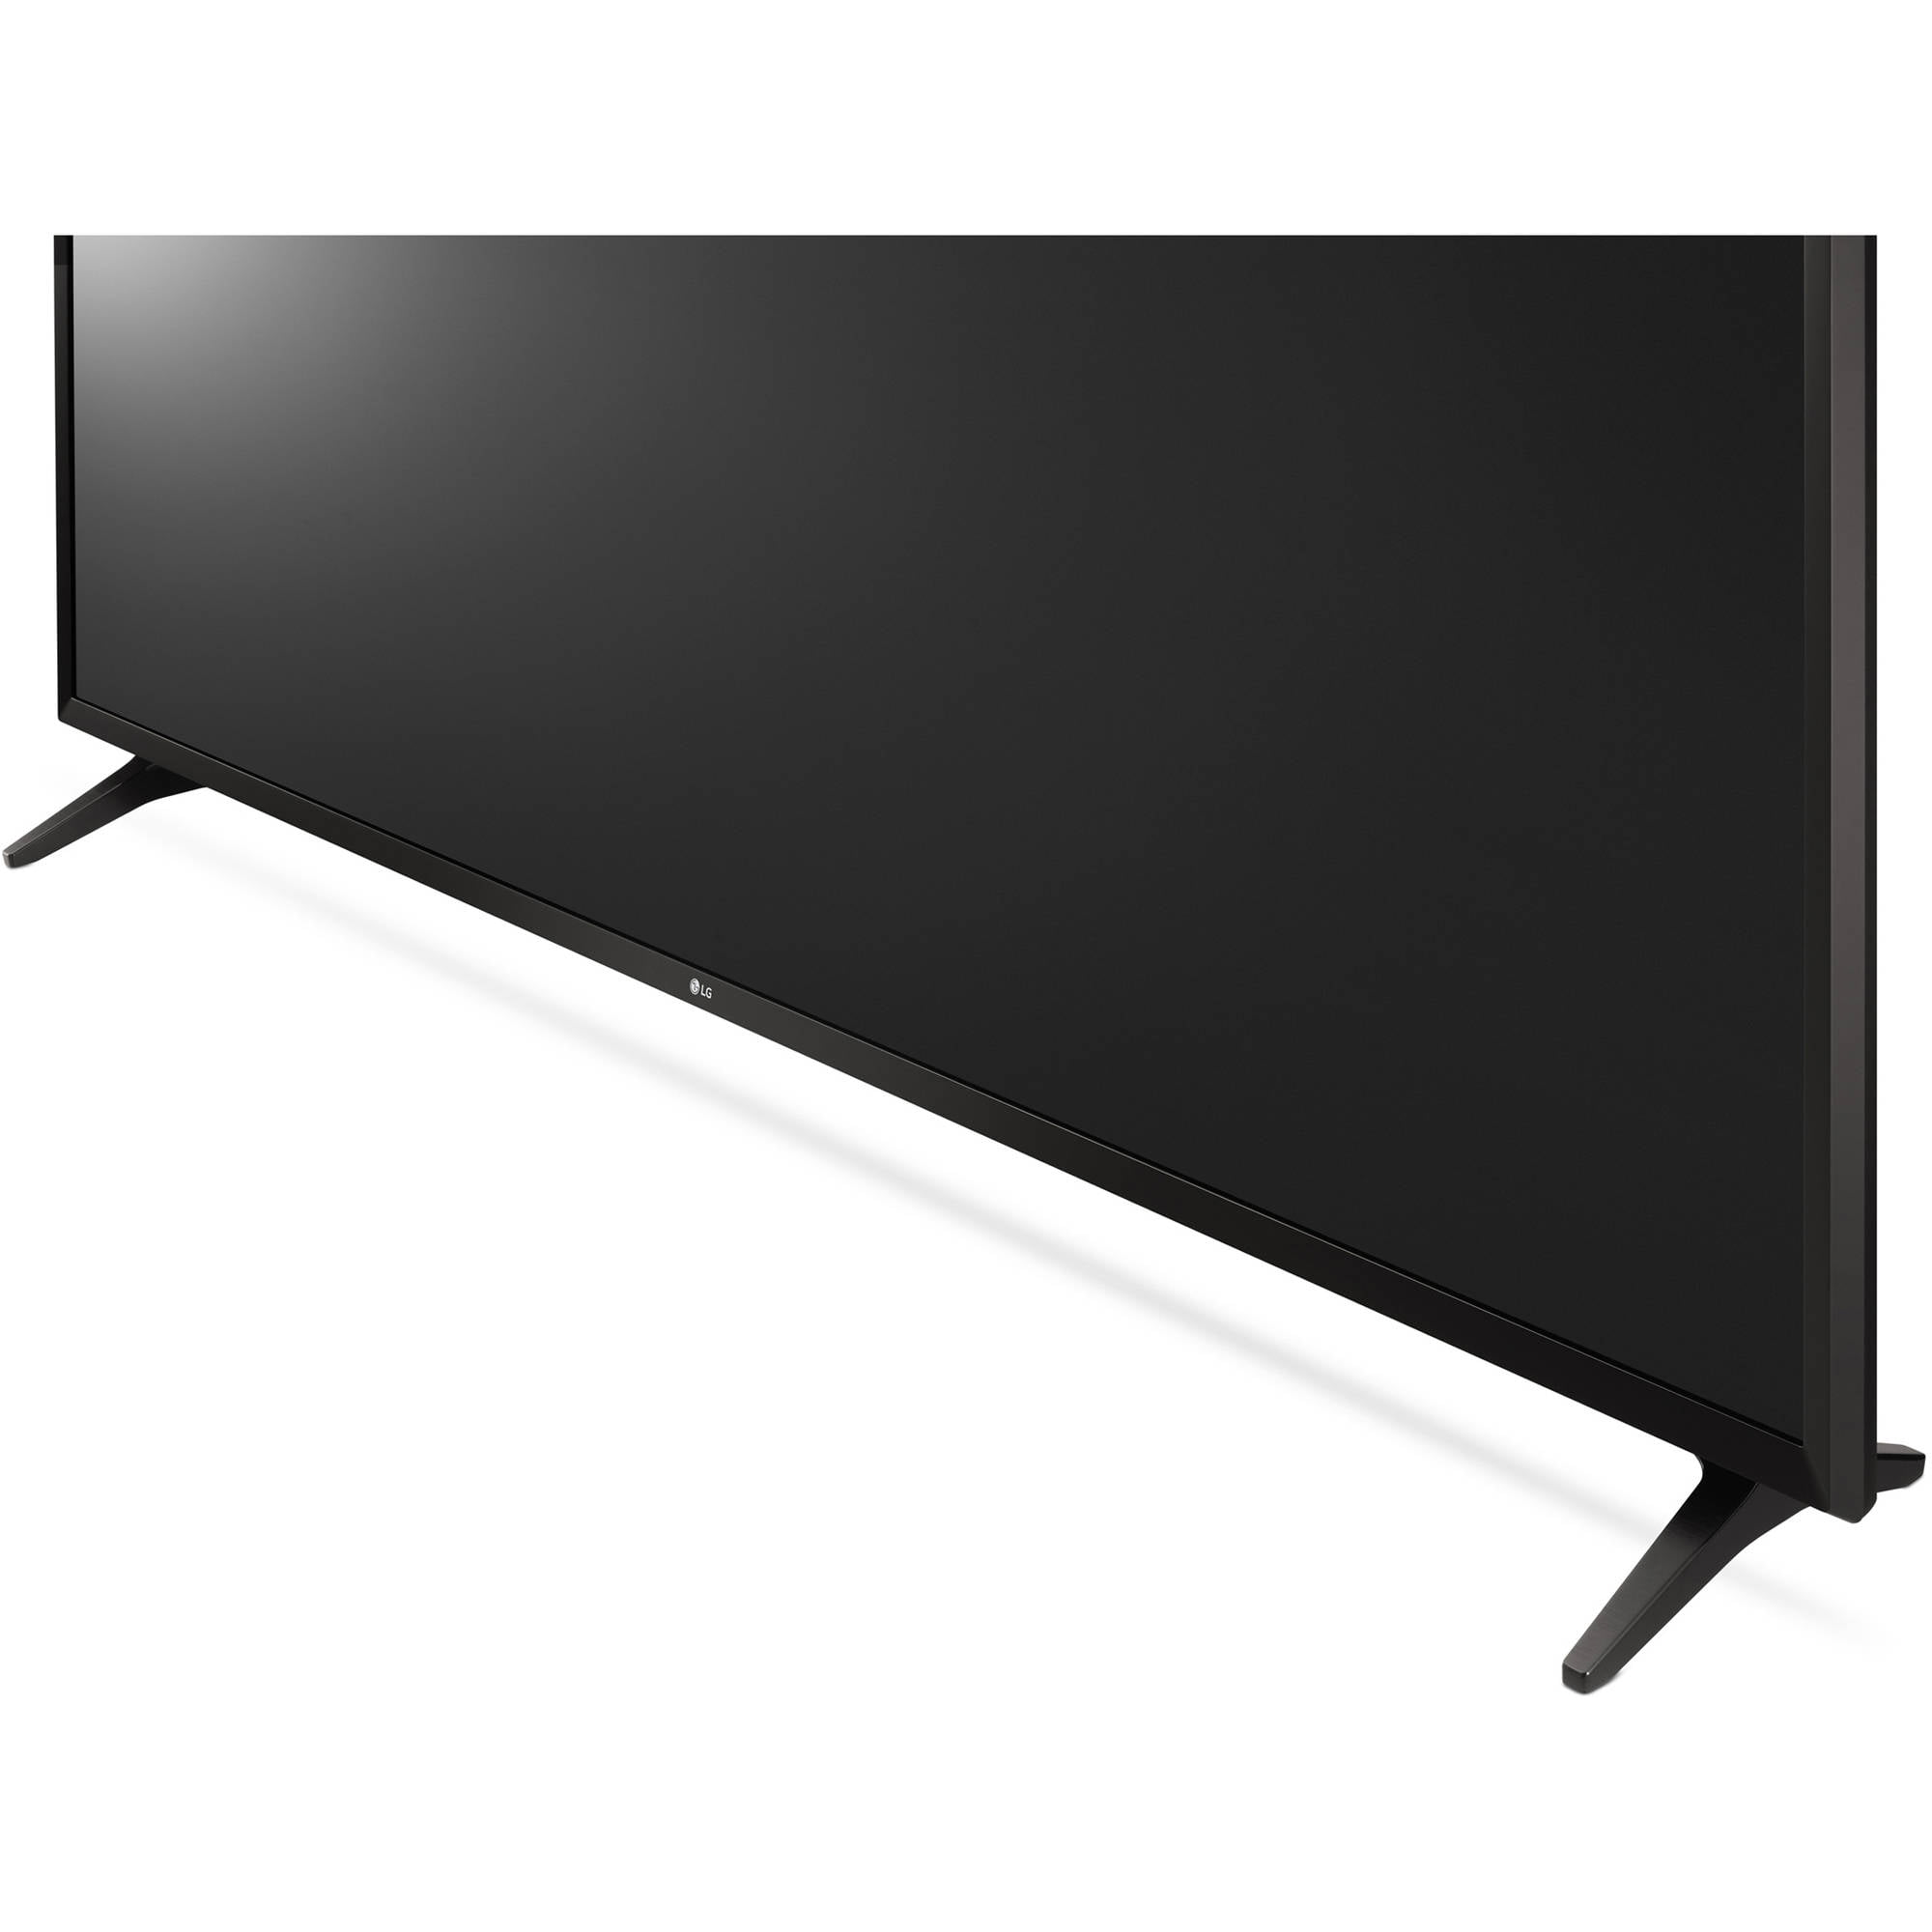 myg nøje Spil LG 43" Class 4K (2160p) Ultra HD Smart LED TV (43UJ6300) - Walmart.com